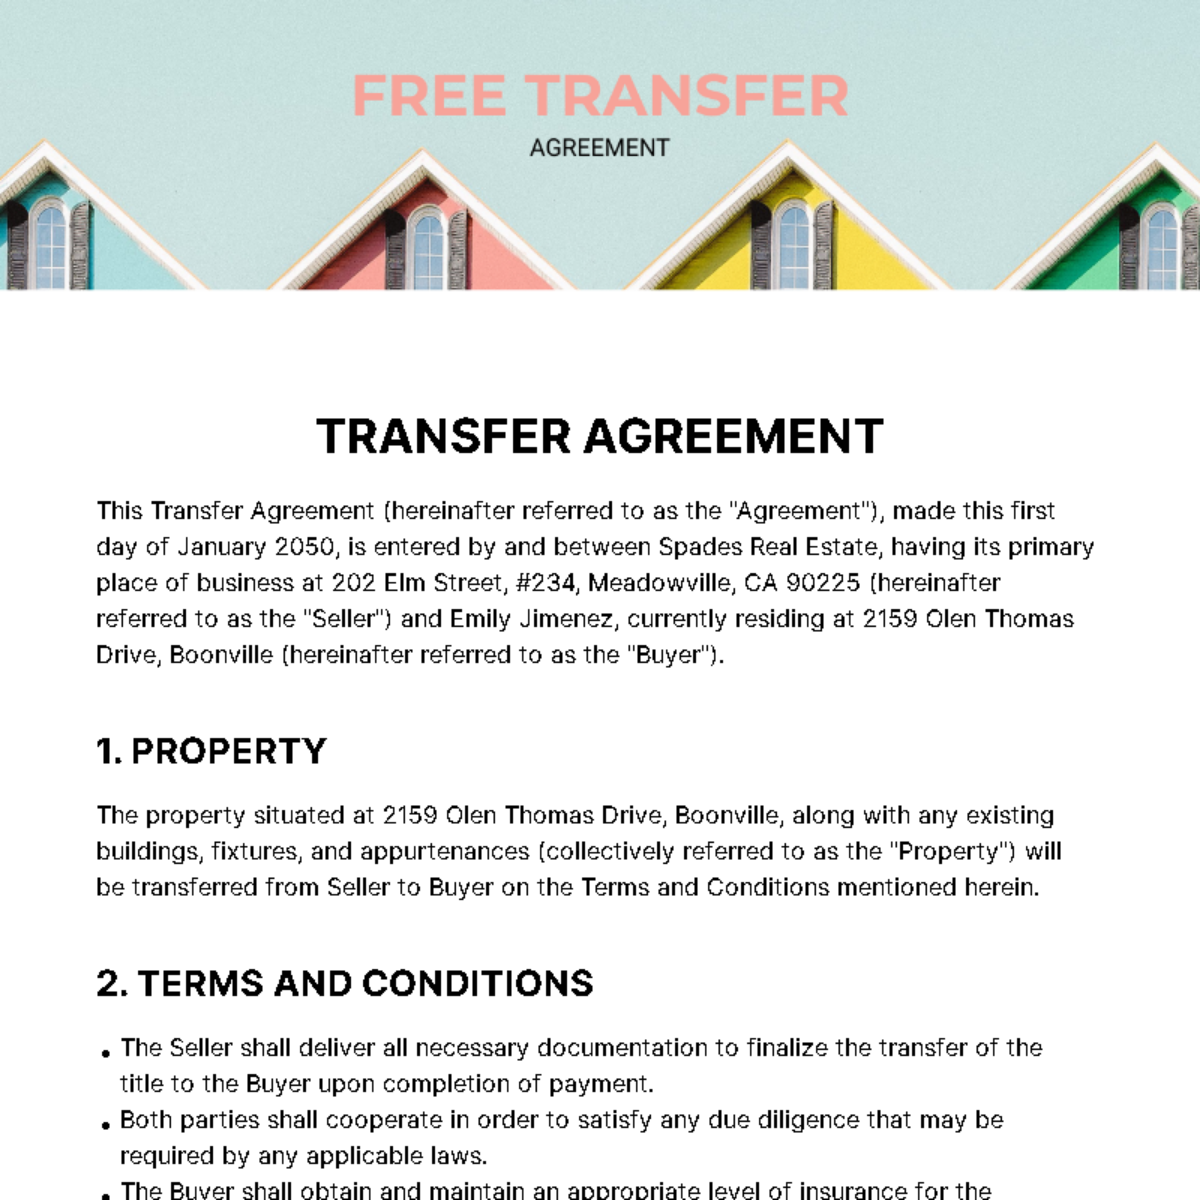 Transfer Agreement Template